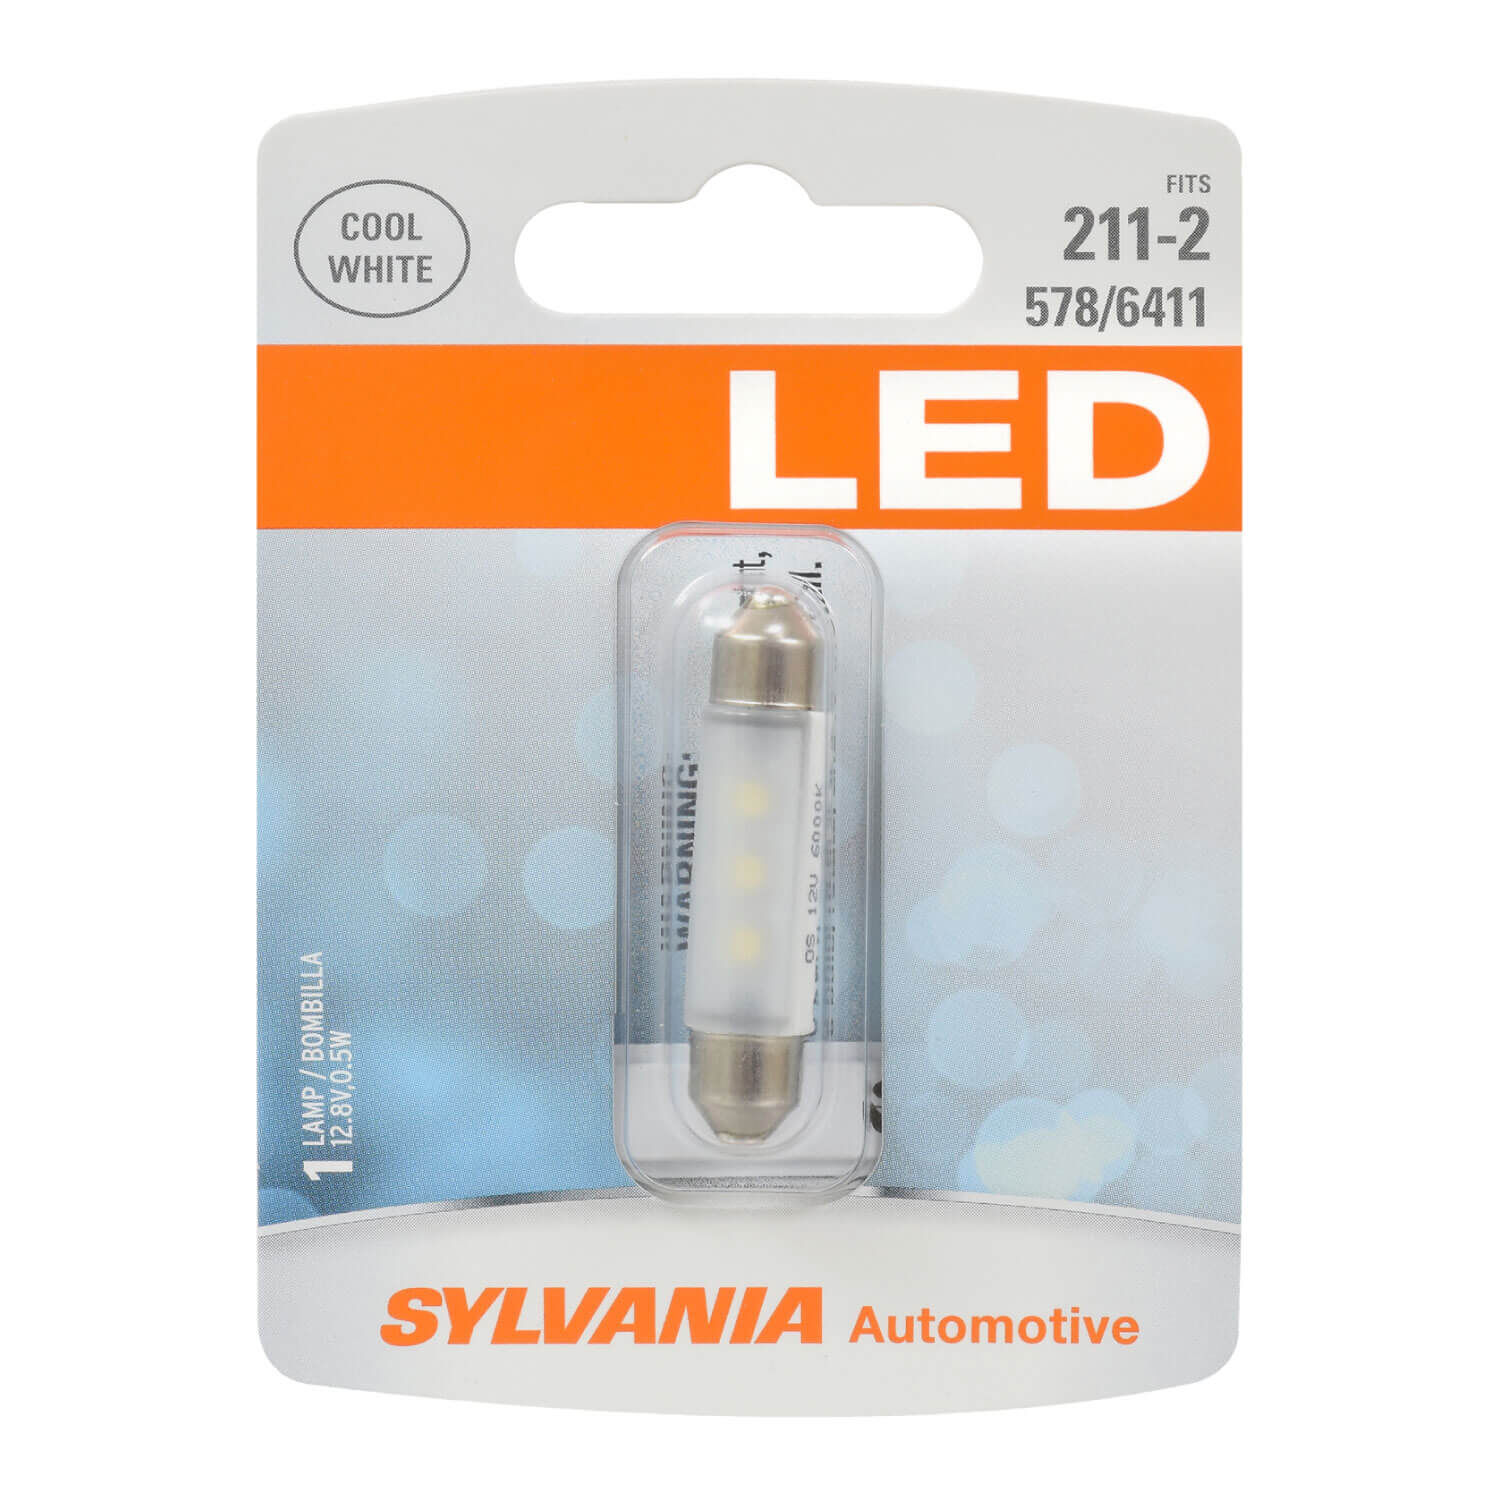 Contains 1 Bulb SYLVANIA 211-2 White LED Bulb, 